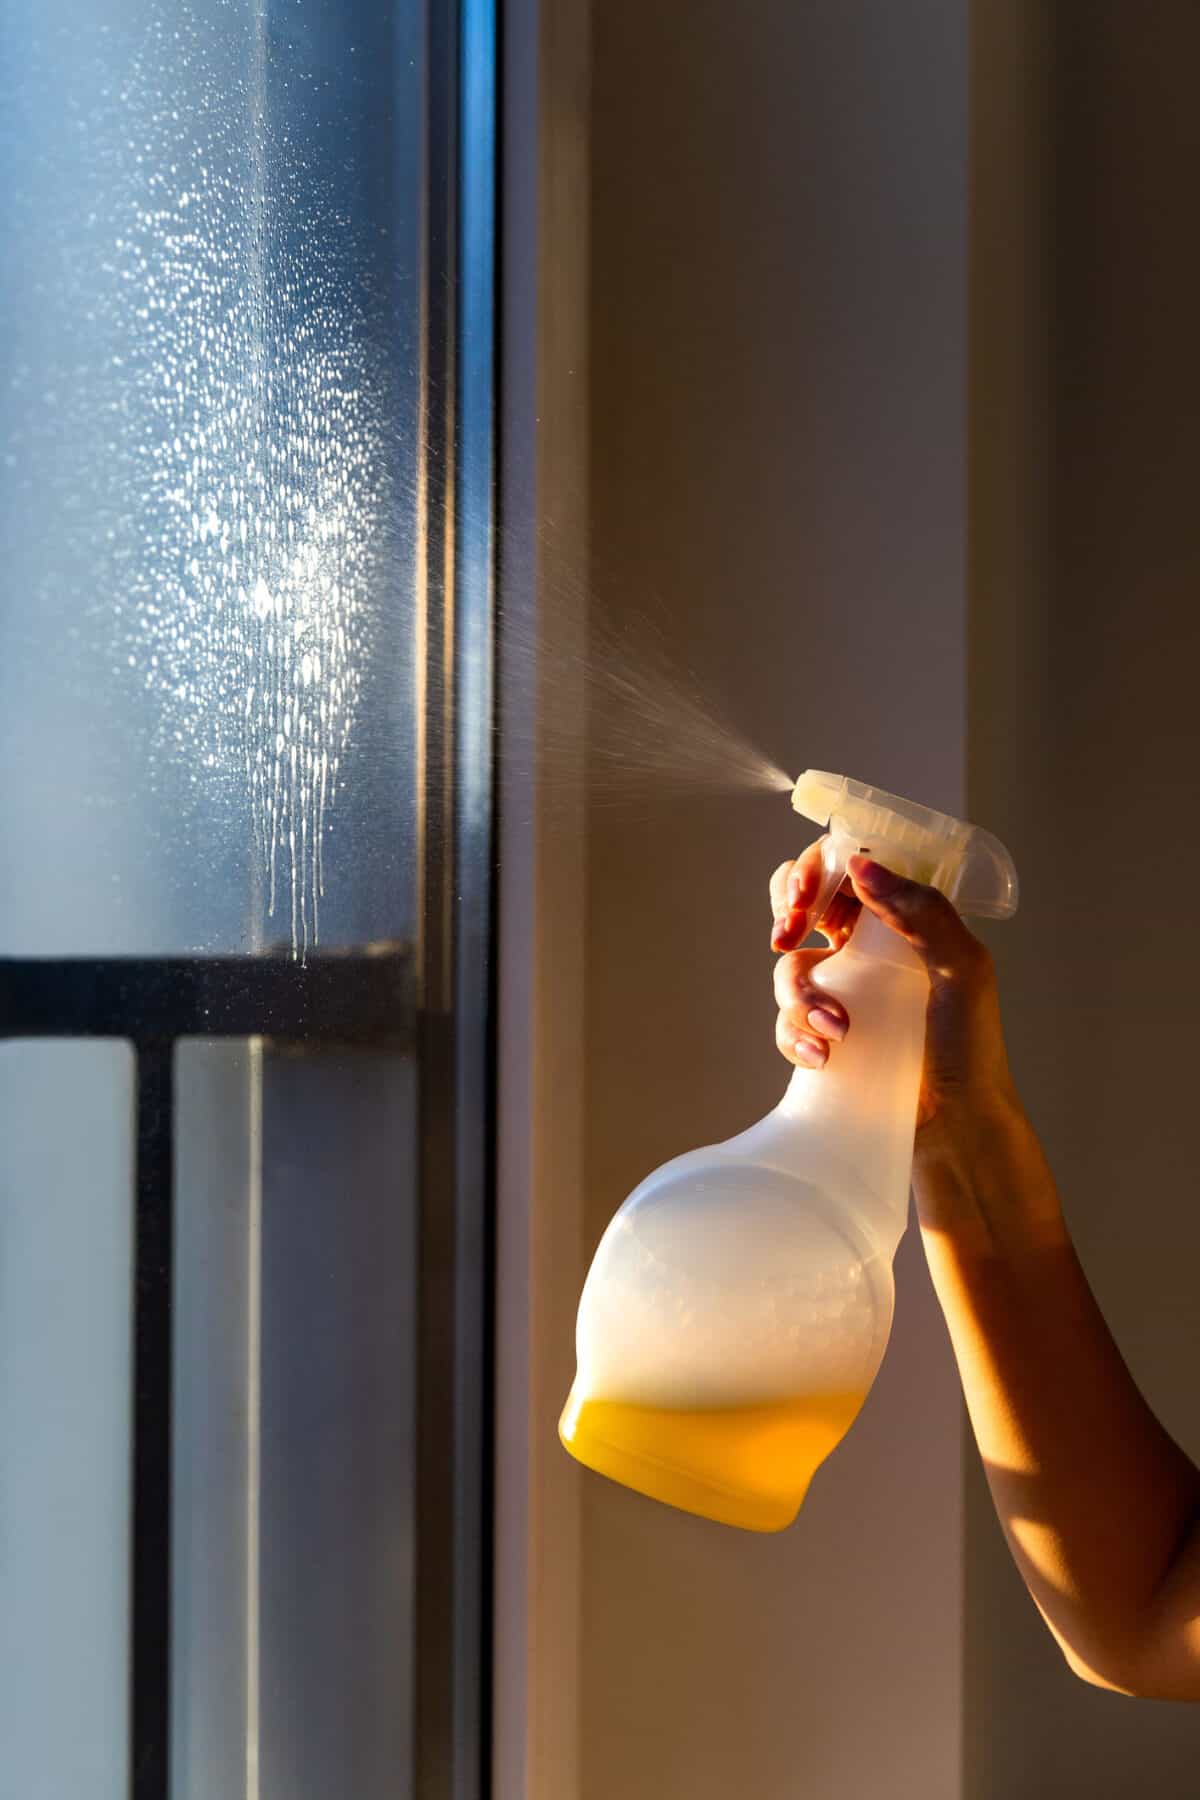 vinegar to clean windows